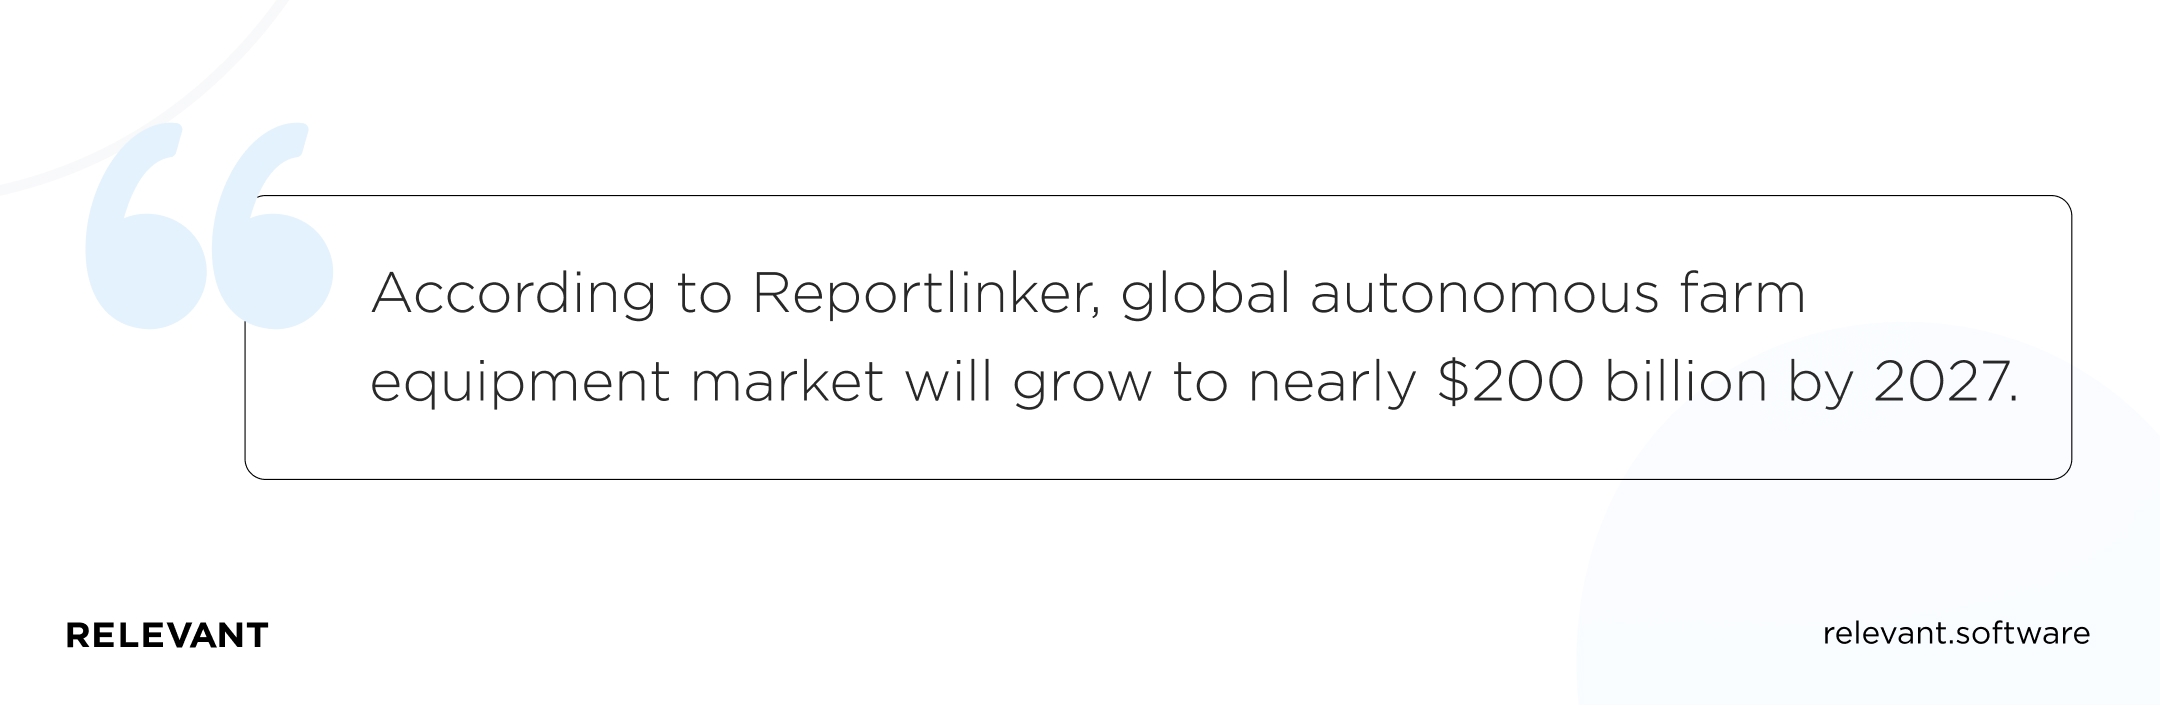 According to Reportlinker, global autonomous farm equipment market will grow to nearly 0 billion by 2027.